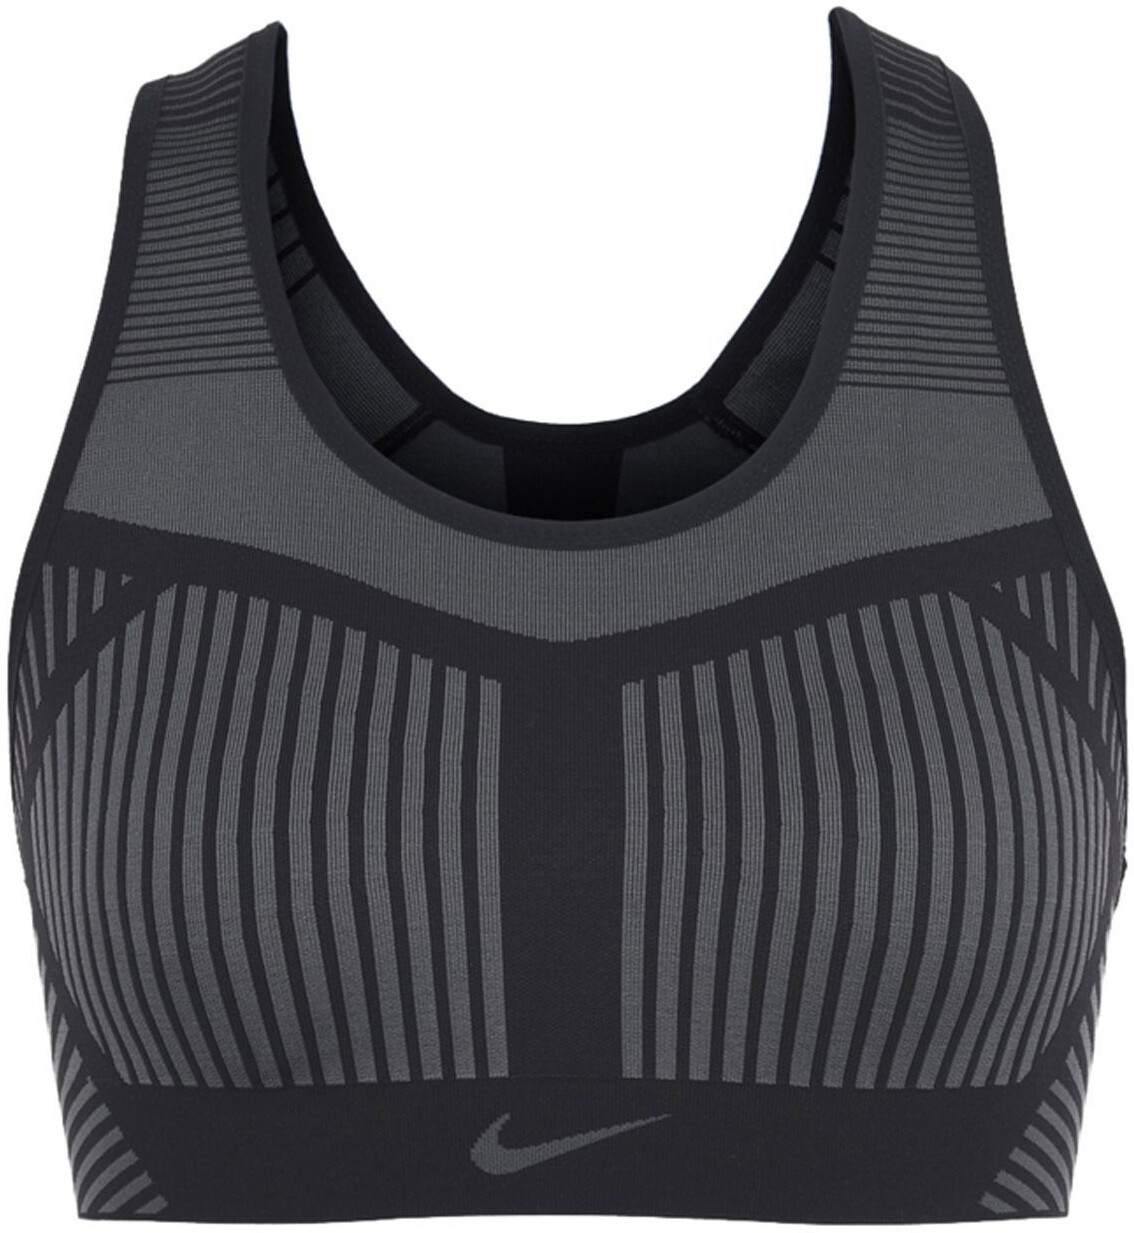 Nike FE/NOM Flyknit Bra Available Today